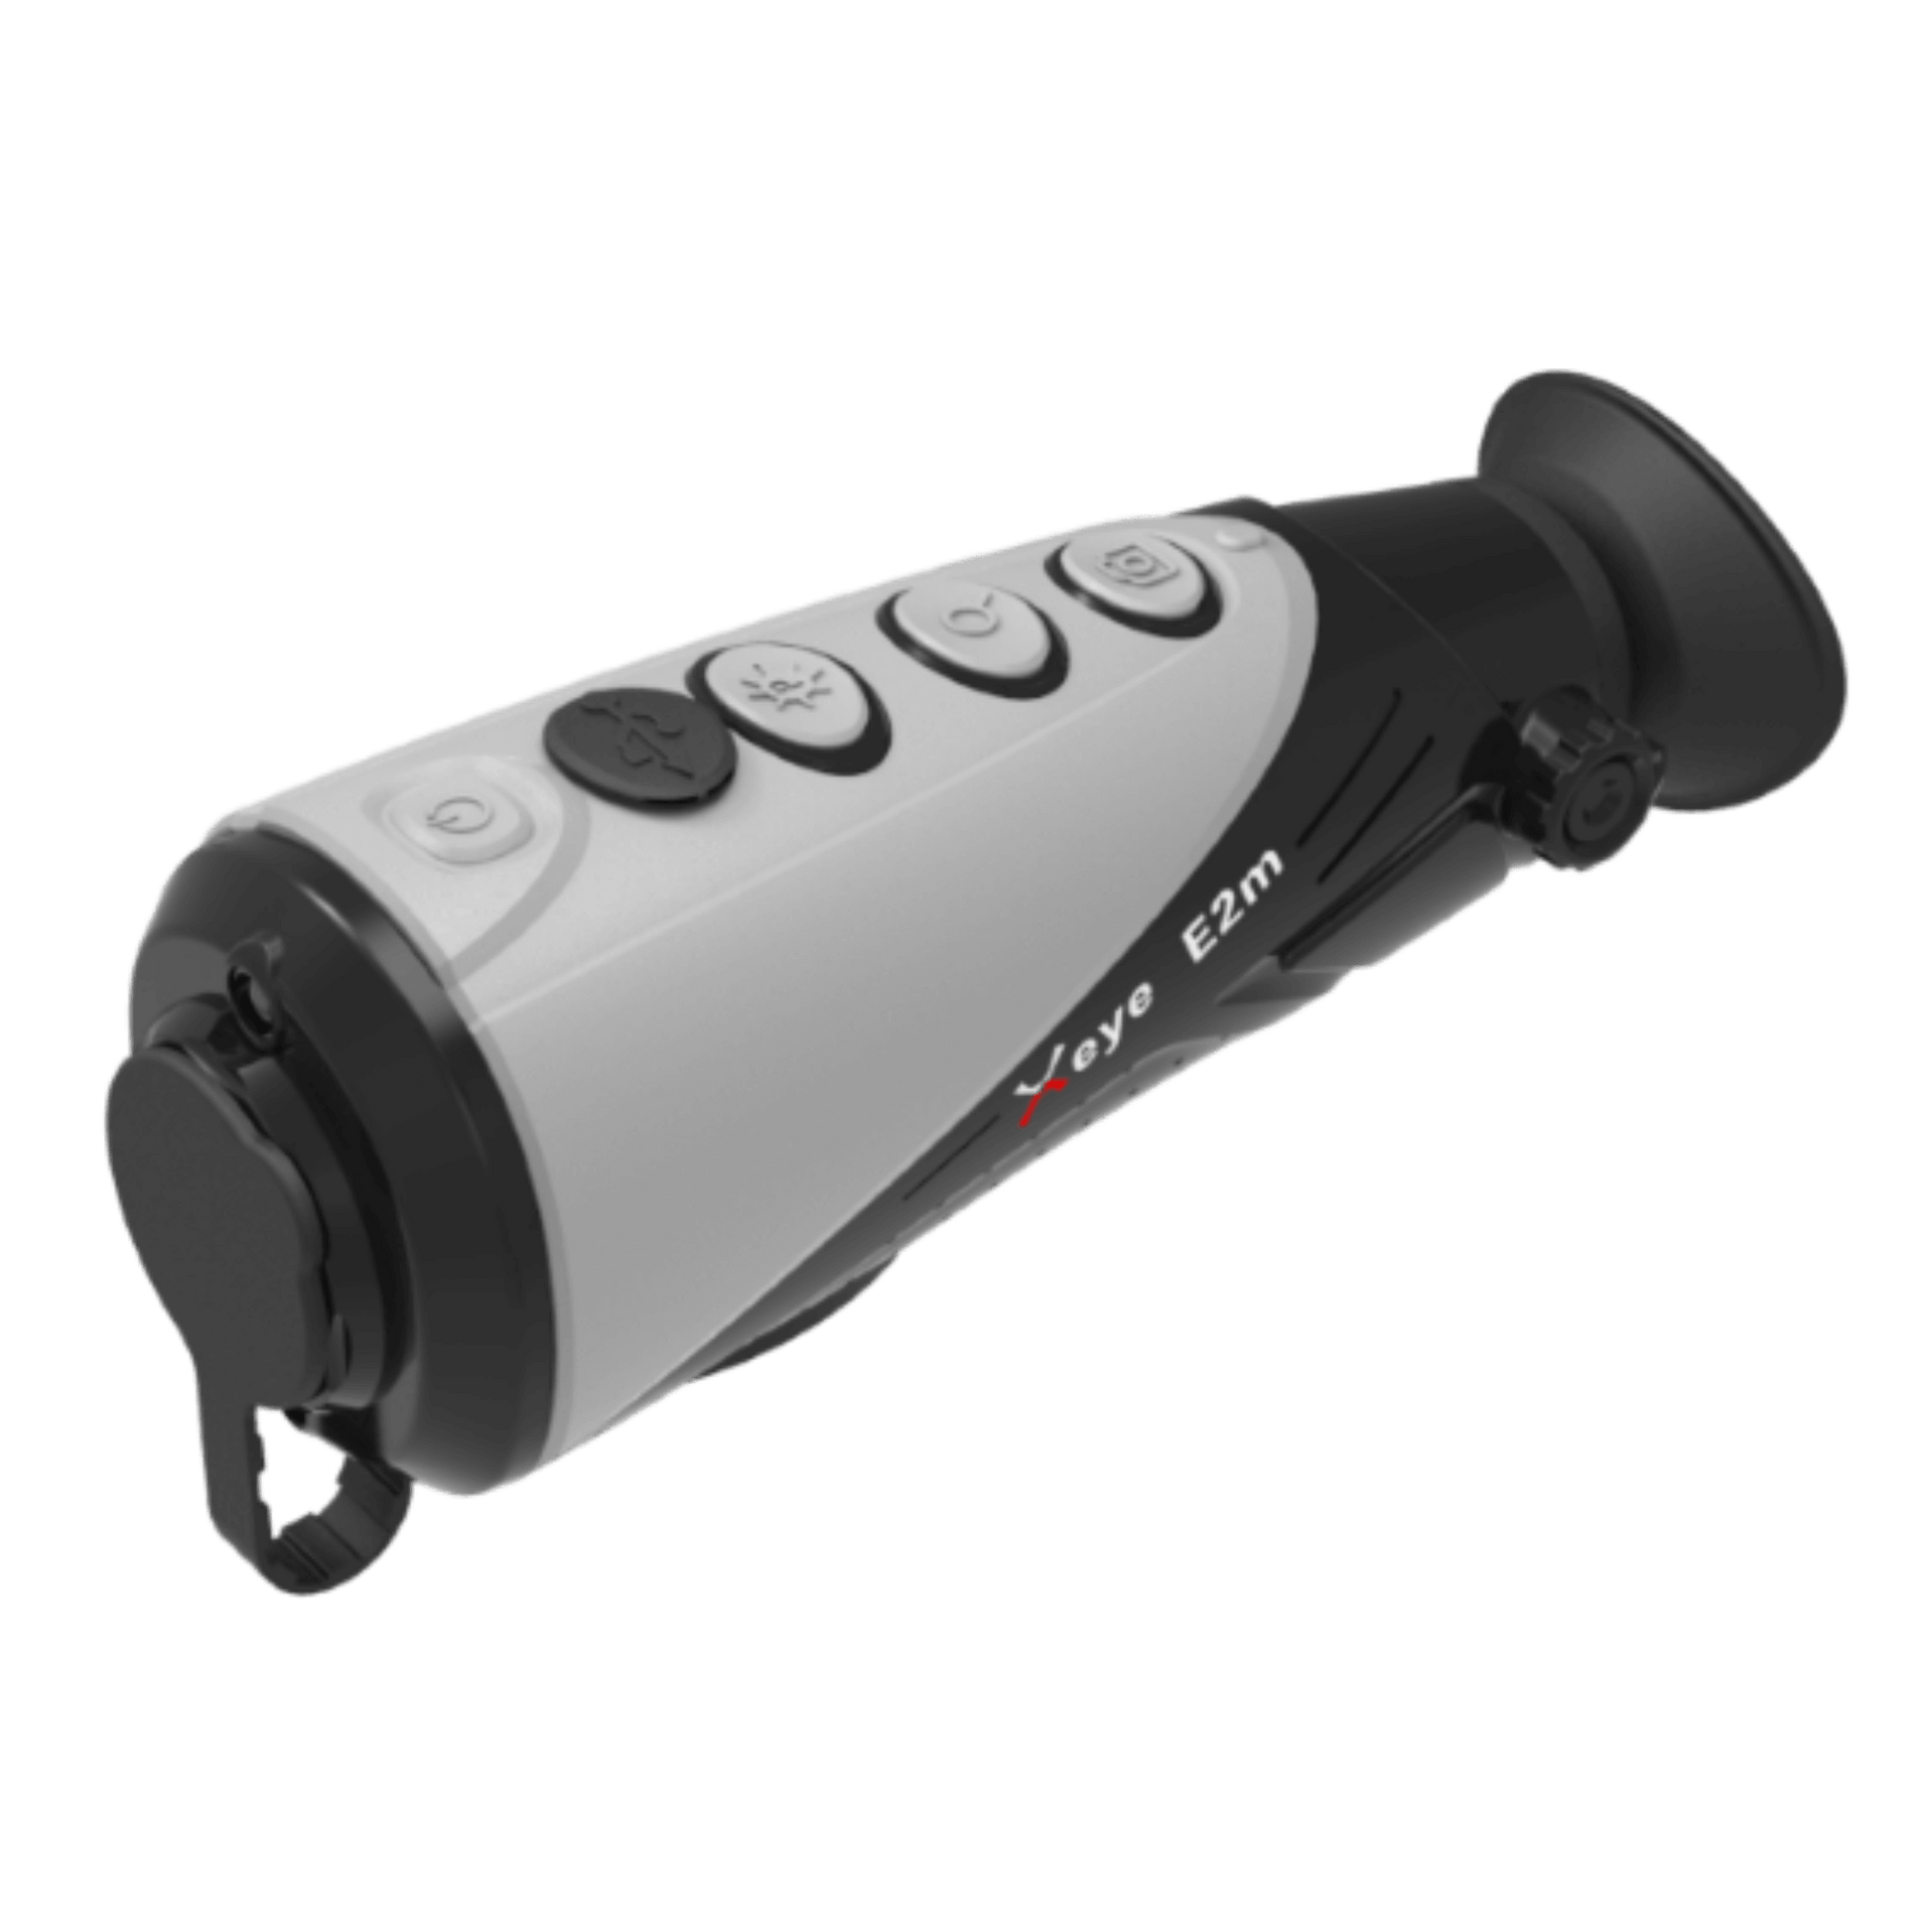 Cape Thermal - InfiRay Thermal Imaging Monocular - InfiRay E2M Eye Series Handheld Thermal Monocular Side View